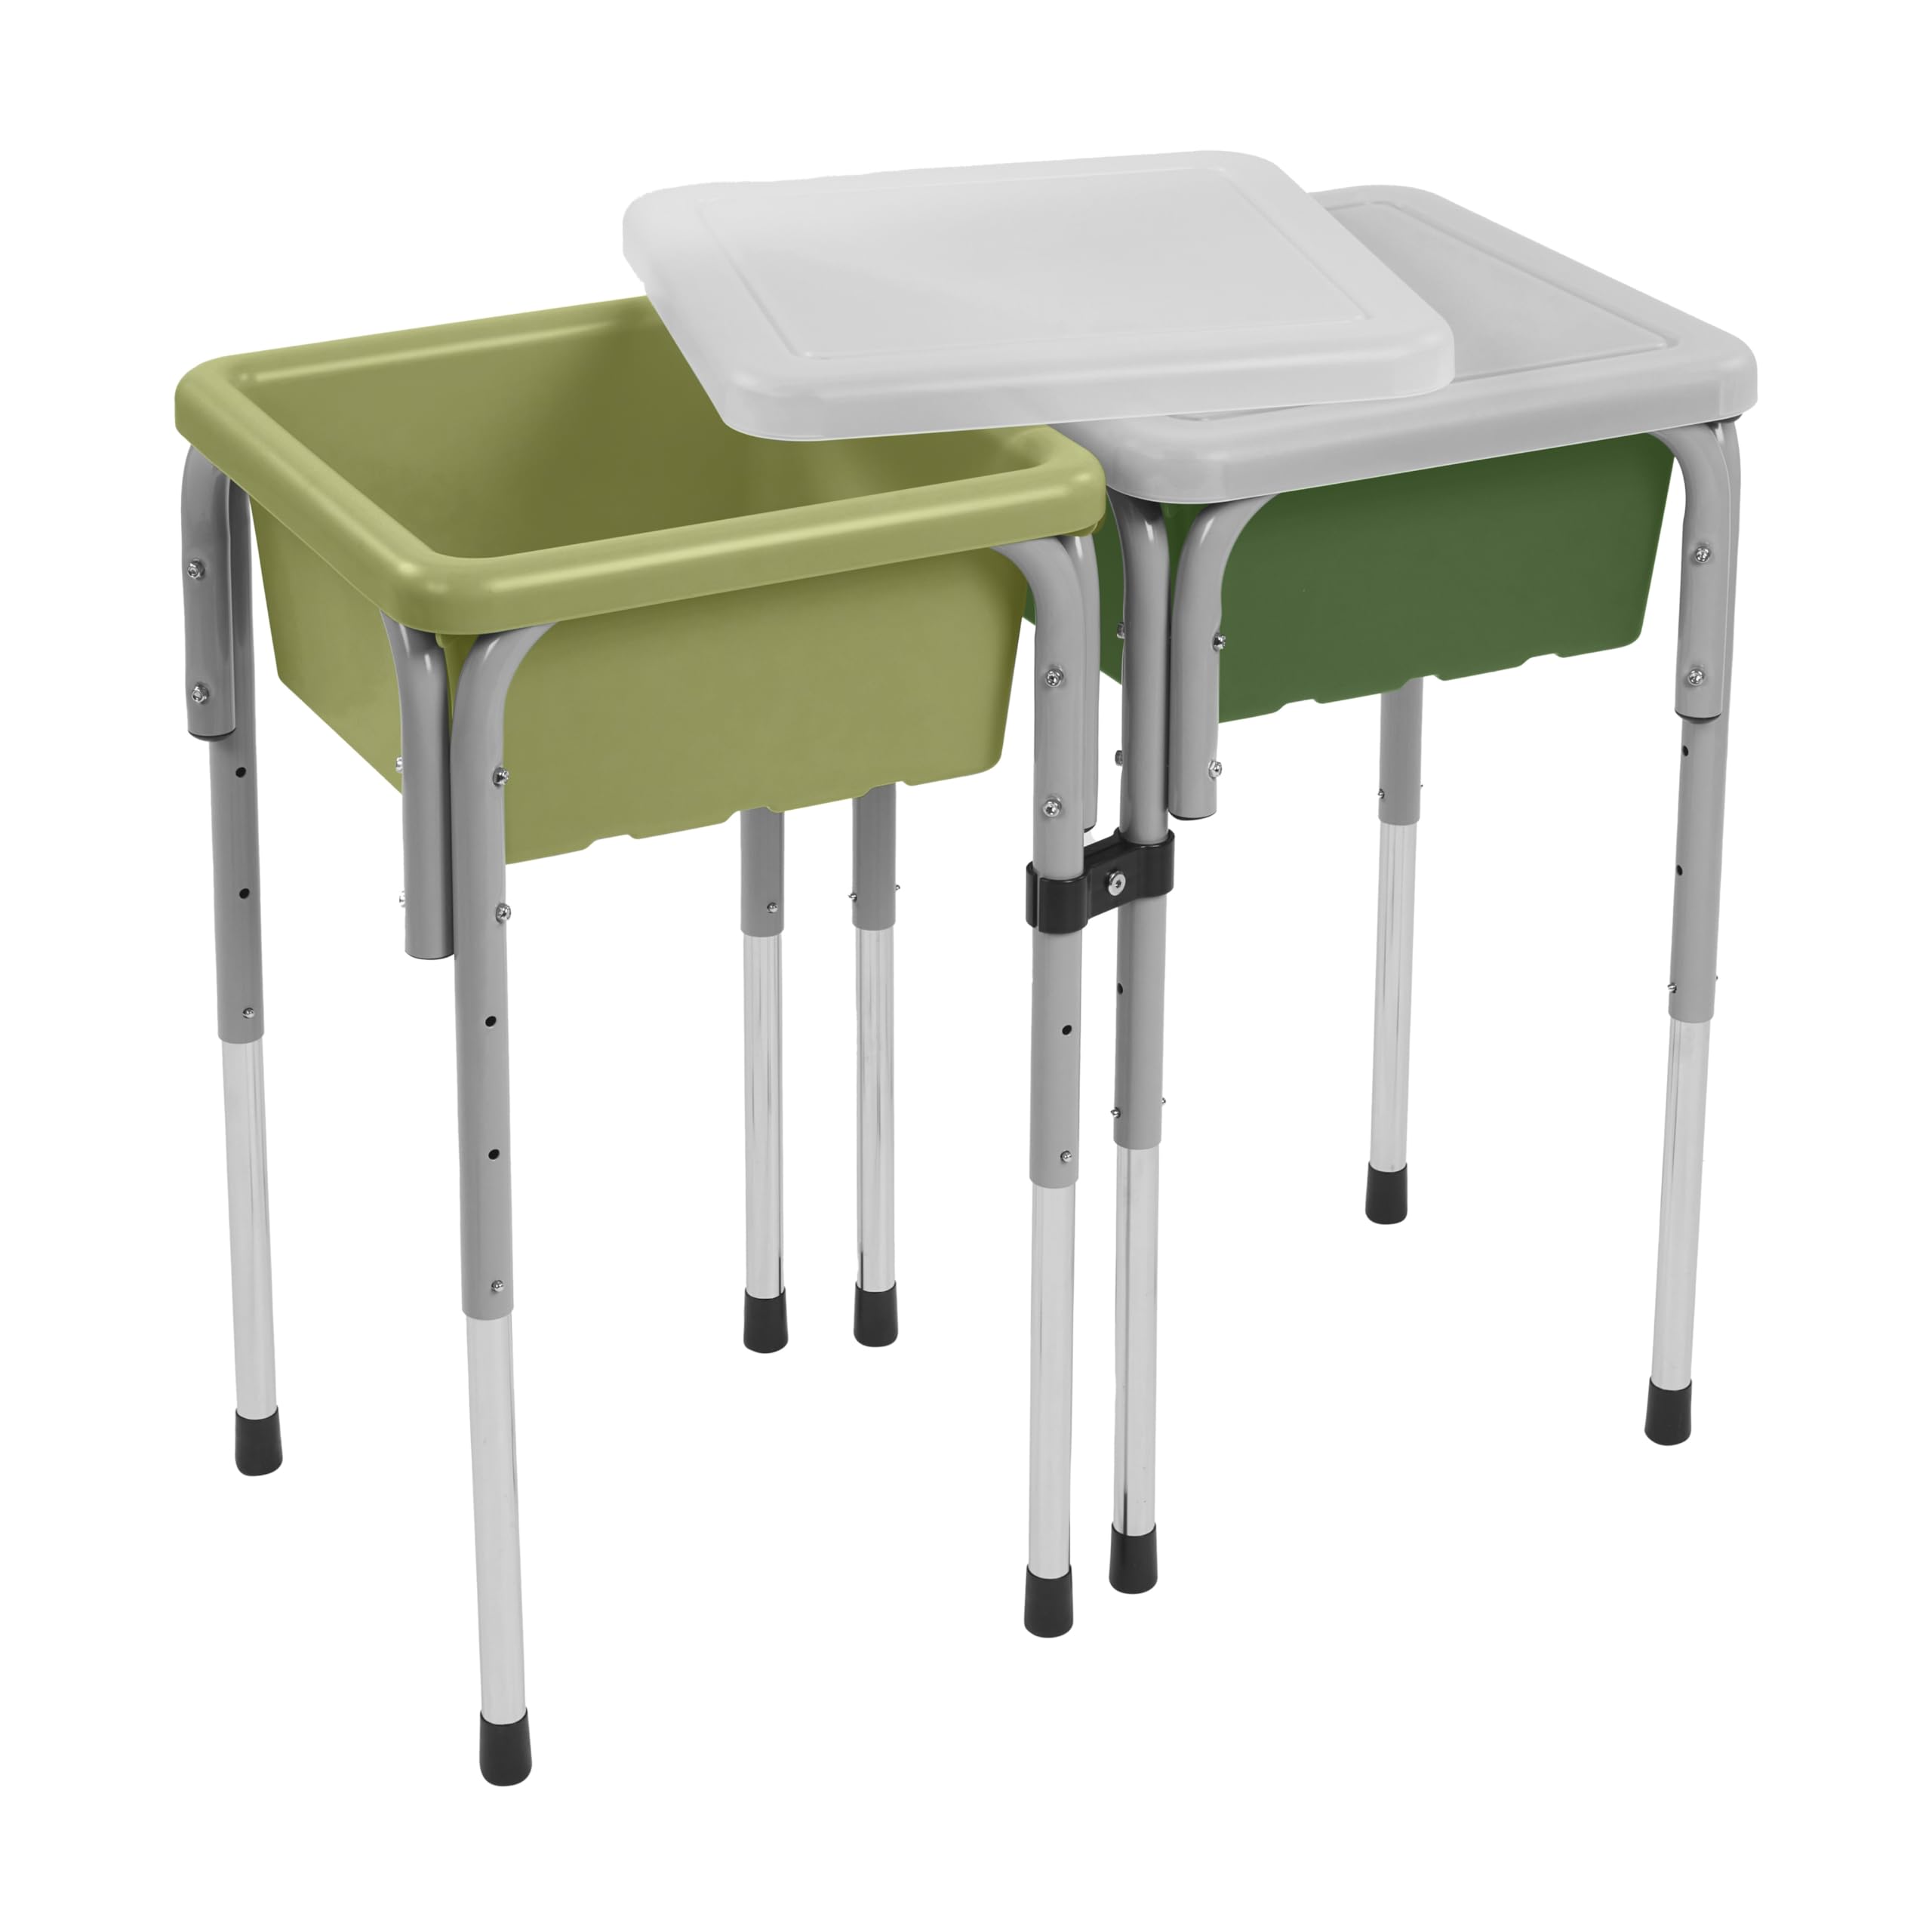 ECR4Kids 2-Station Sand and Water Adjustable Play Table, Sensory Bins, Fern Green/Hunter Green